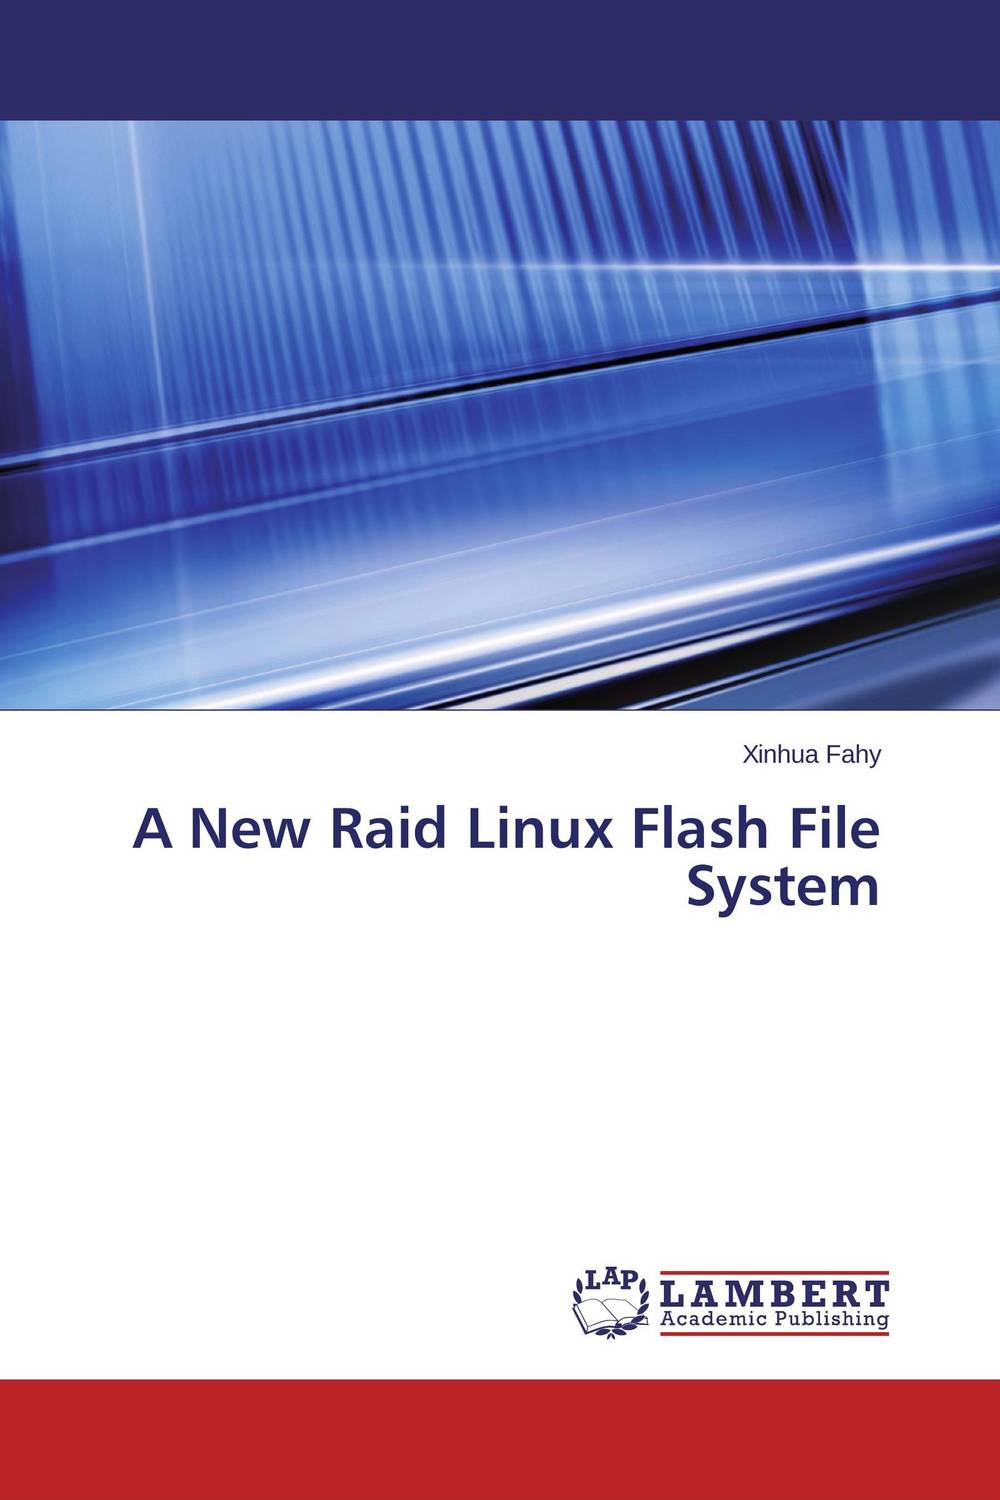 A New Raid Linux Flash File System